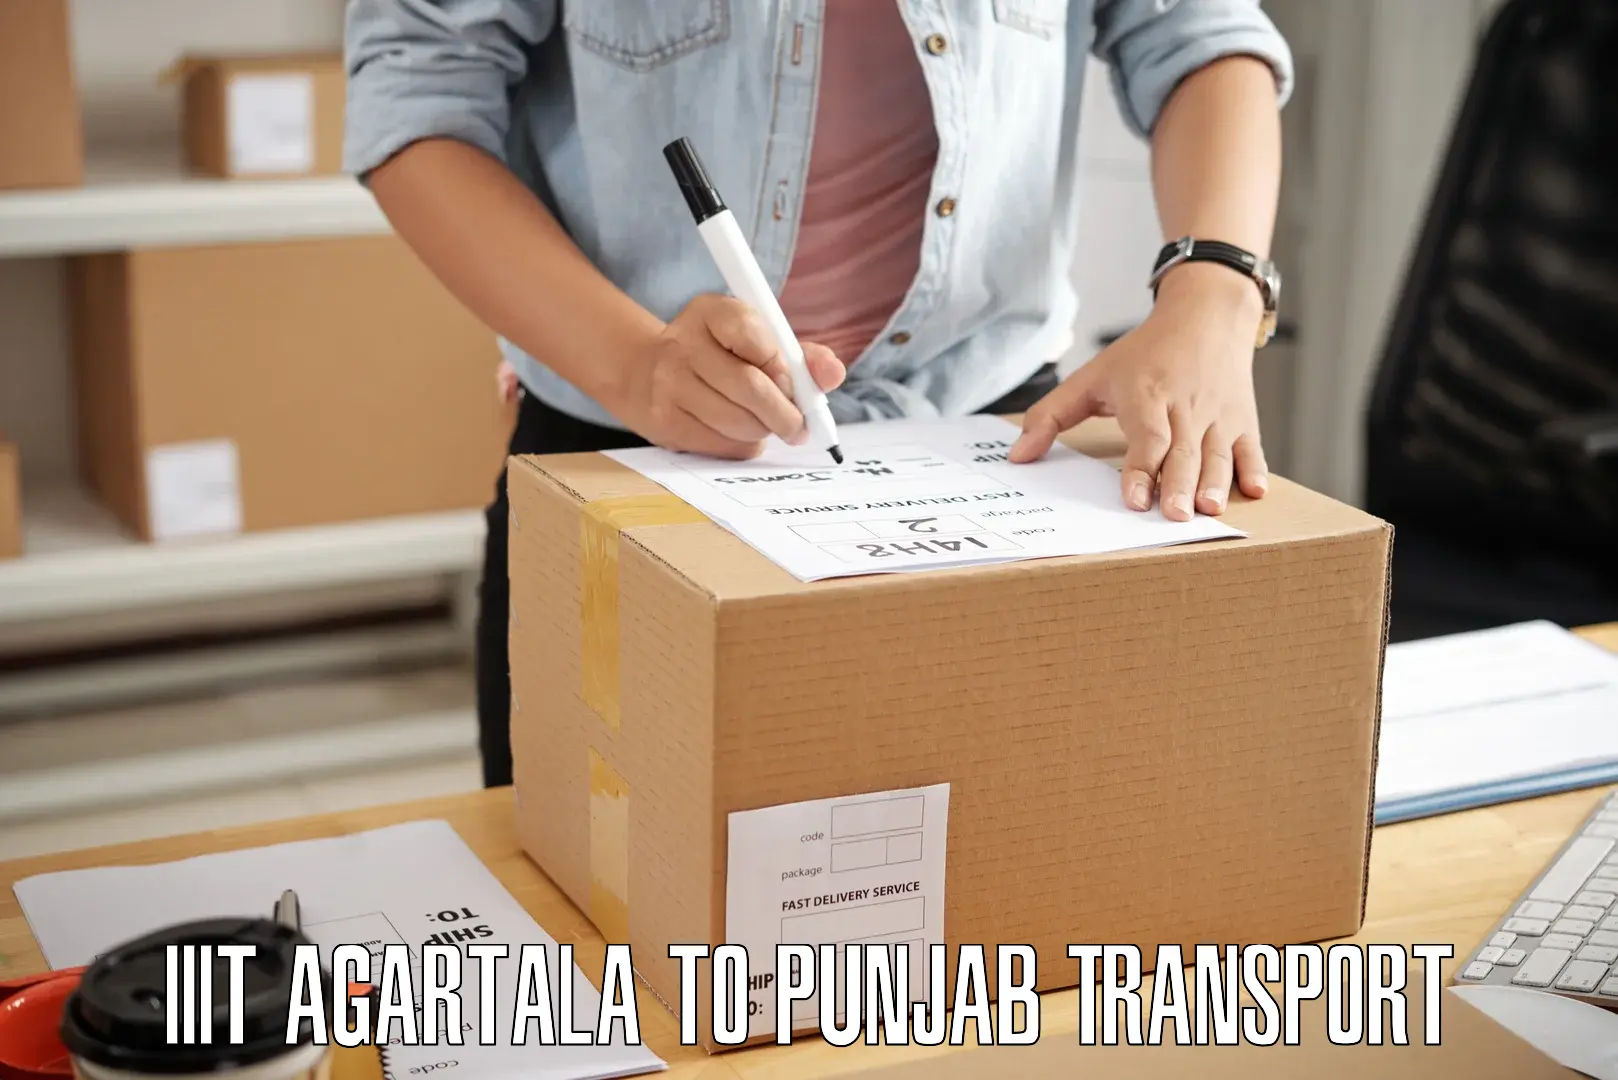 Bike transfer IIIT Agartala to Punjab